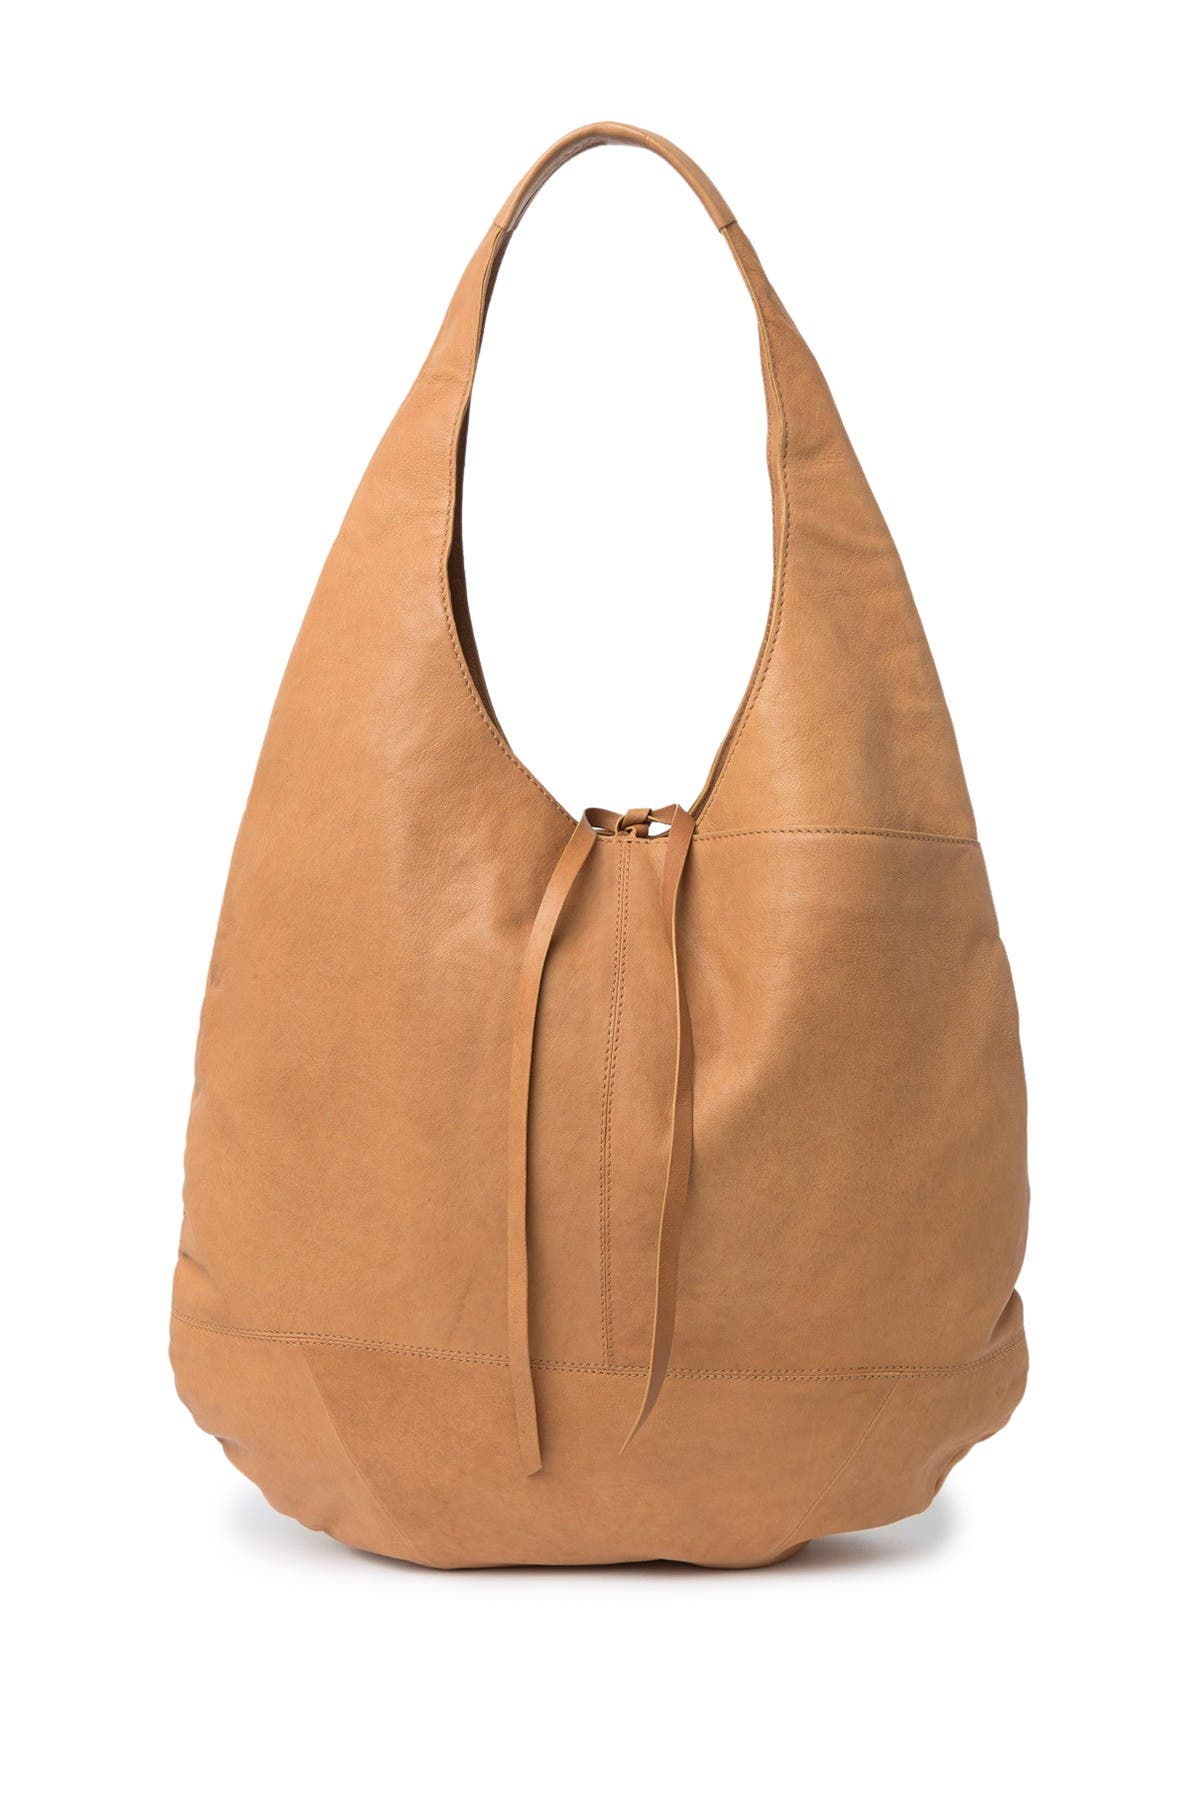 Lucky Brand Mia Leather Hobo Bag In Open Beige4